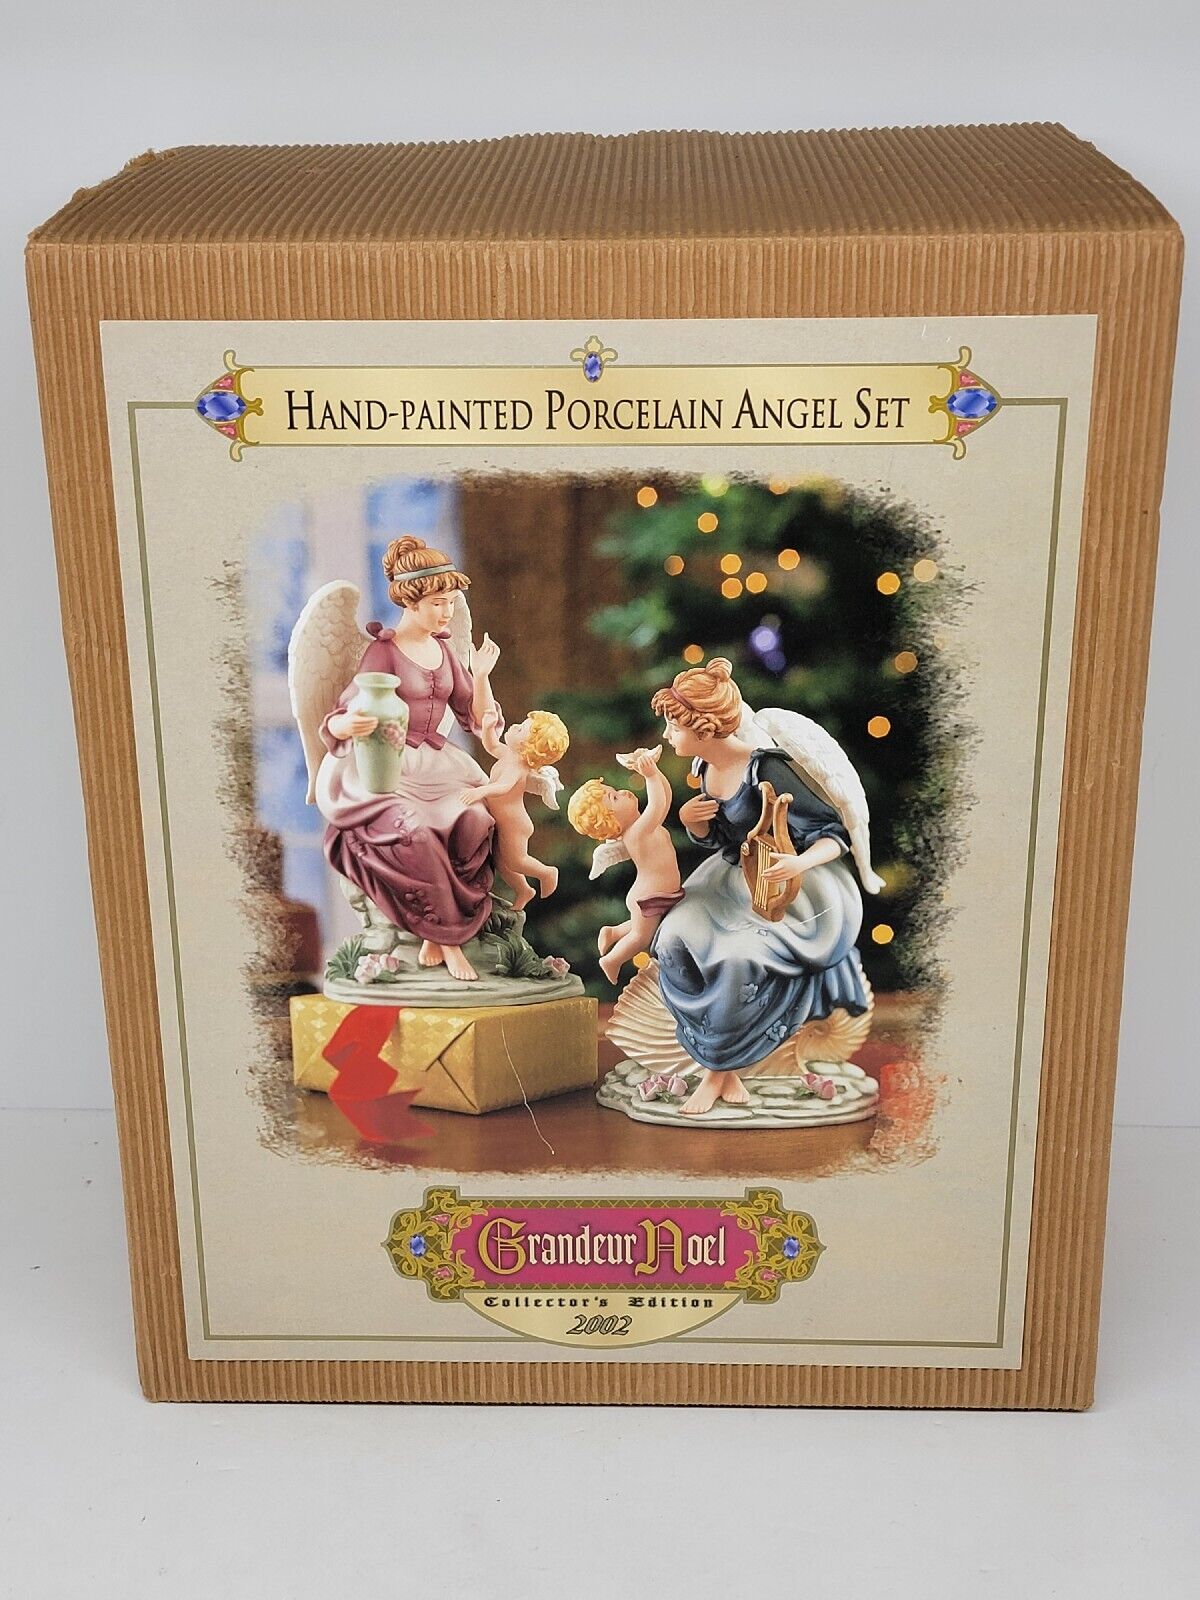 *READ* Grandeur Noel Hand-Painted Porcelain Angel Set Collector Edition 2002